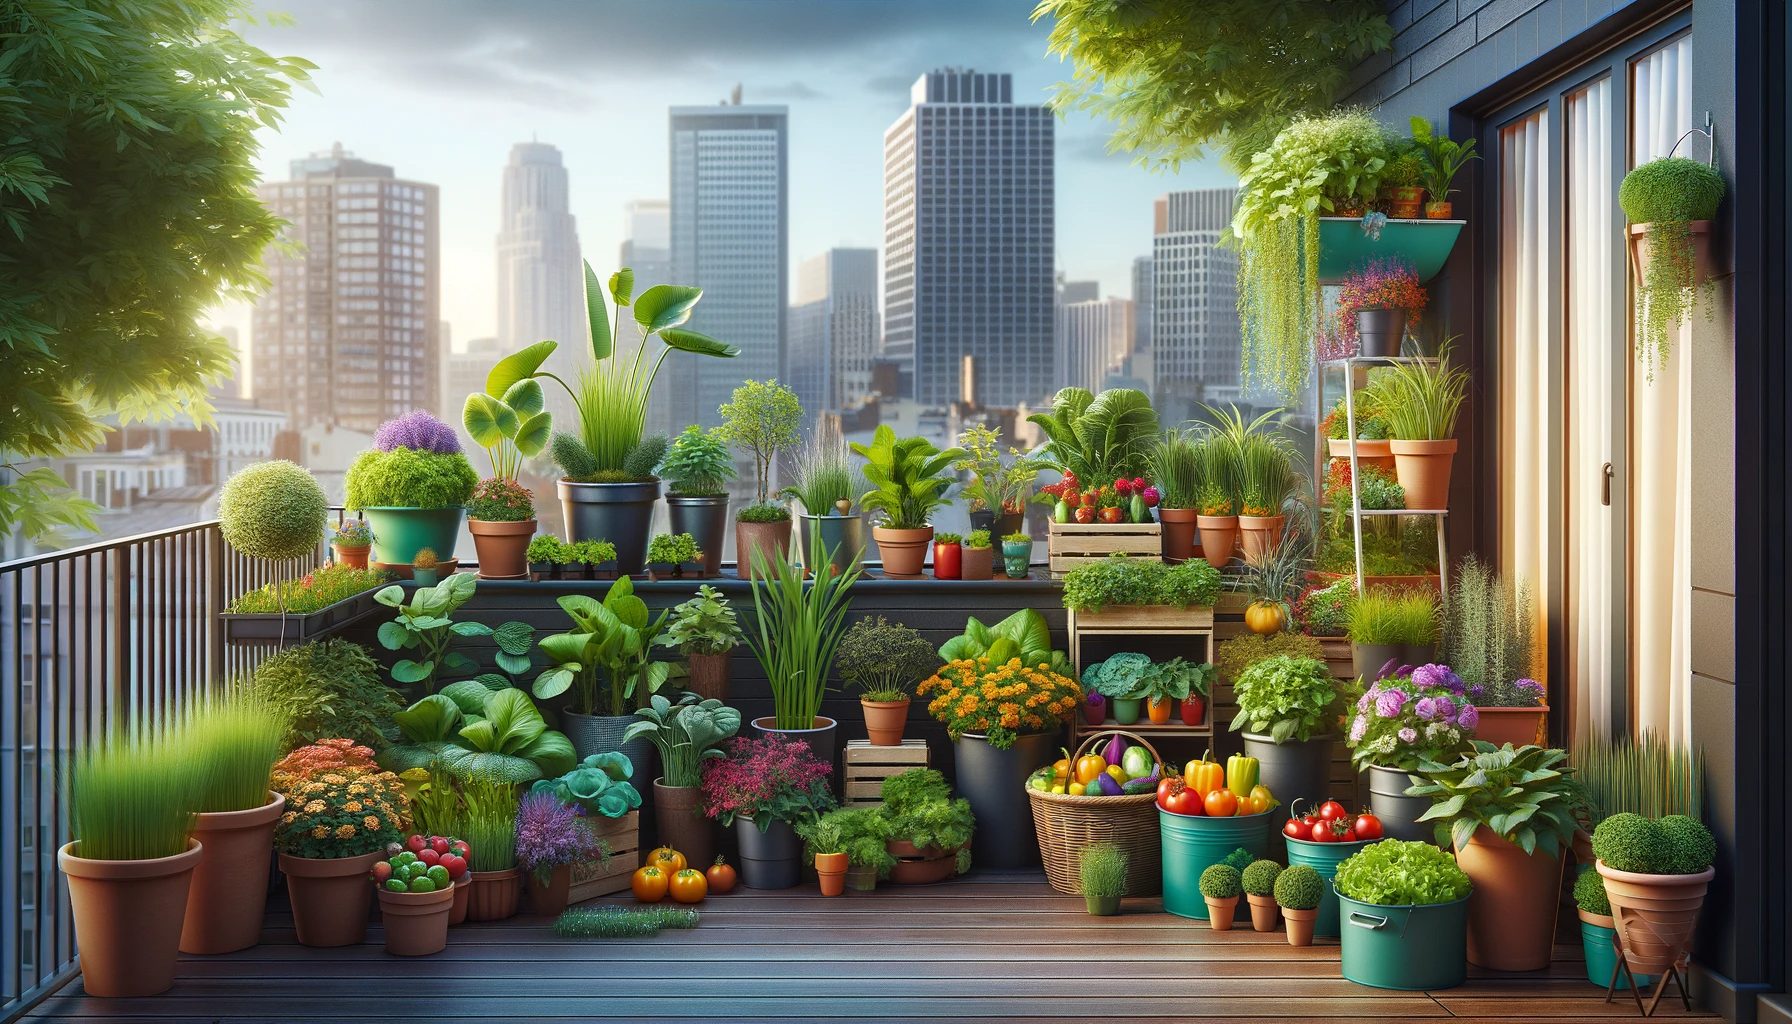 Benefits of Urban Container Gardening